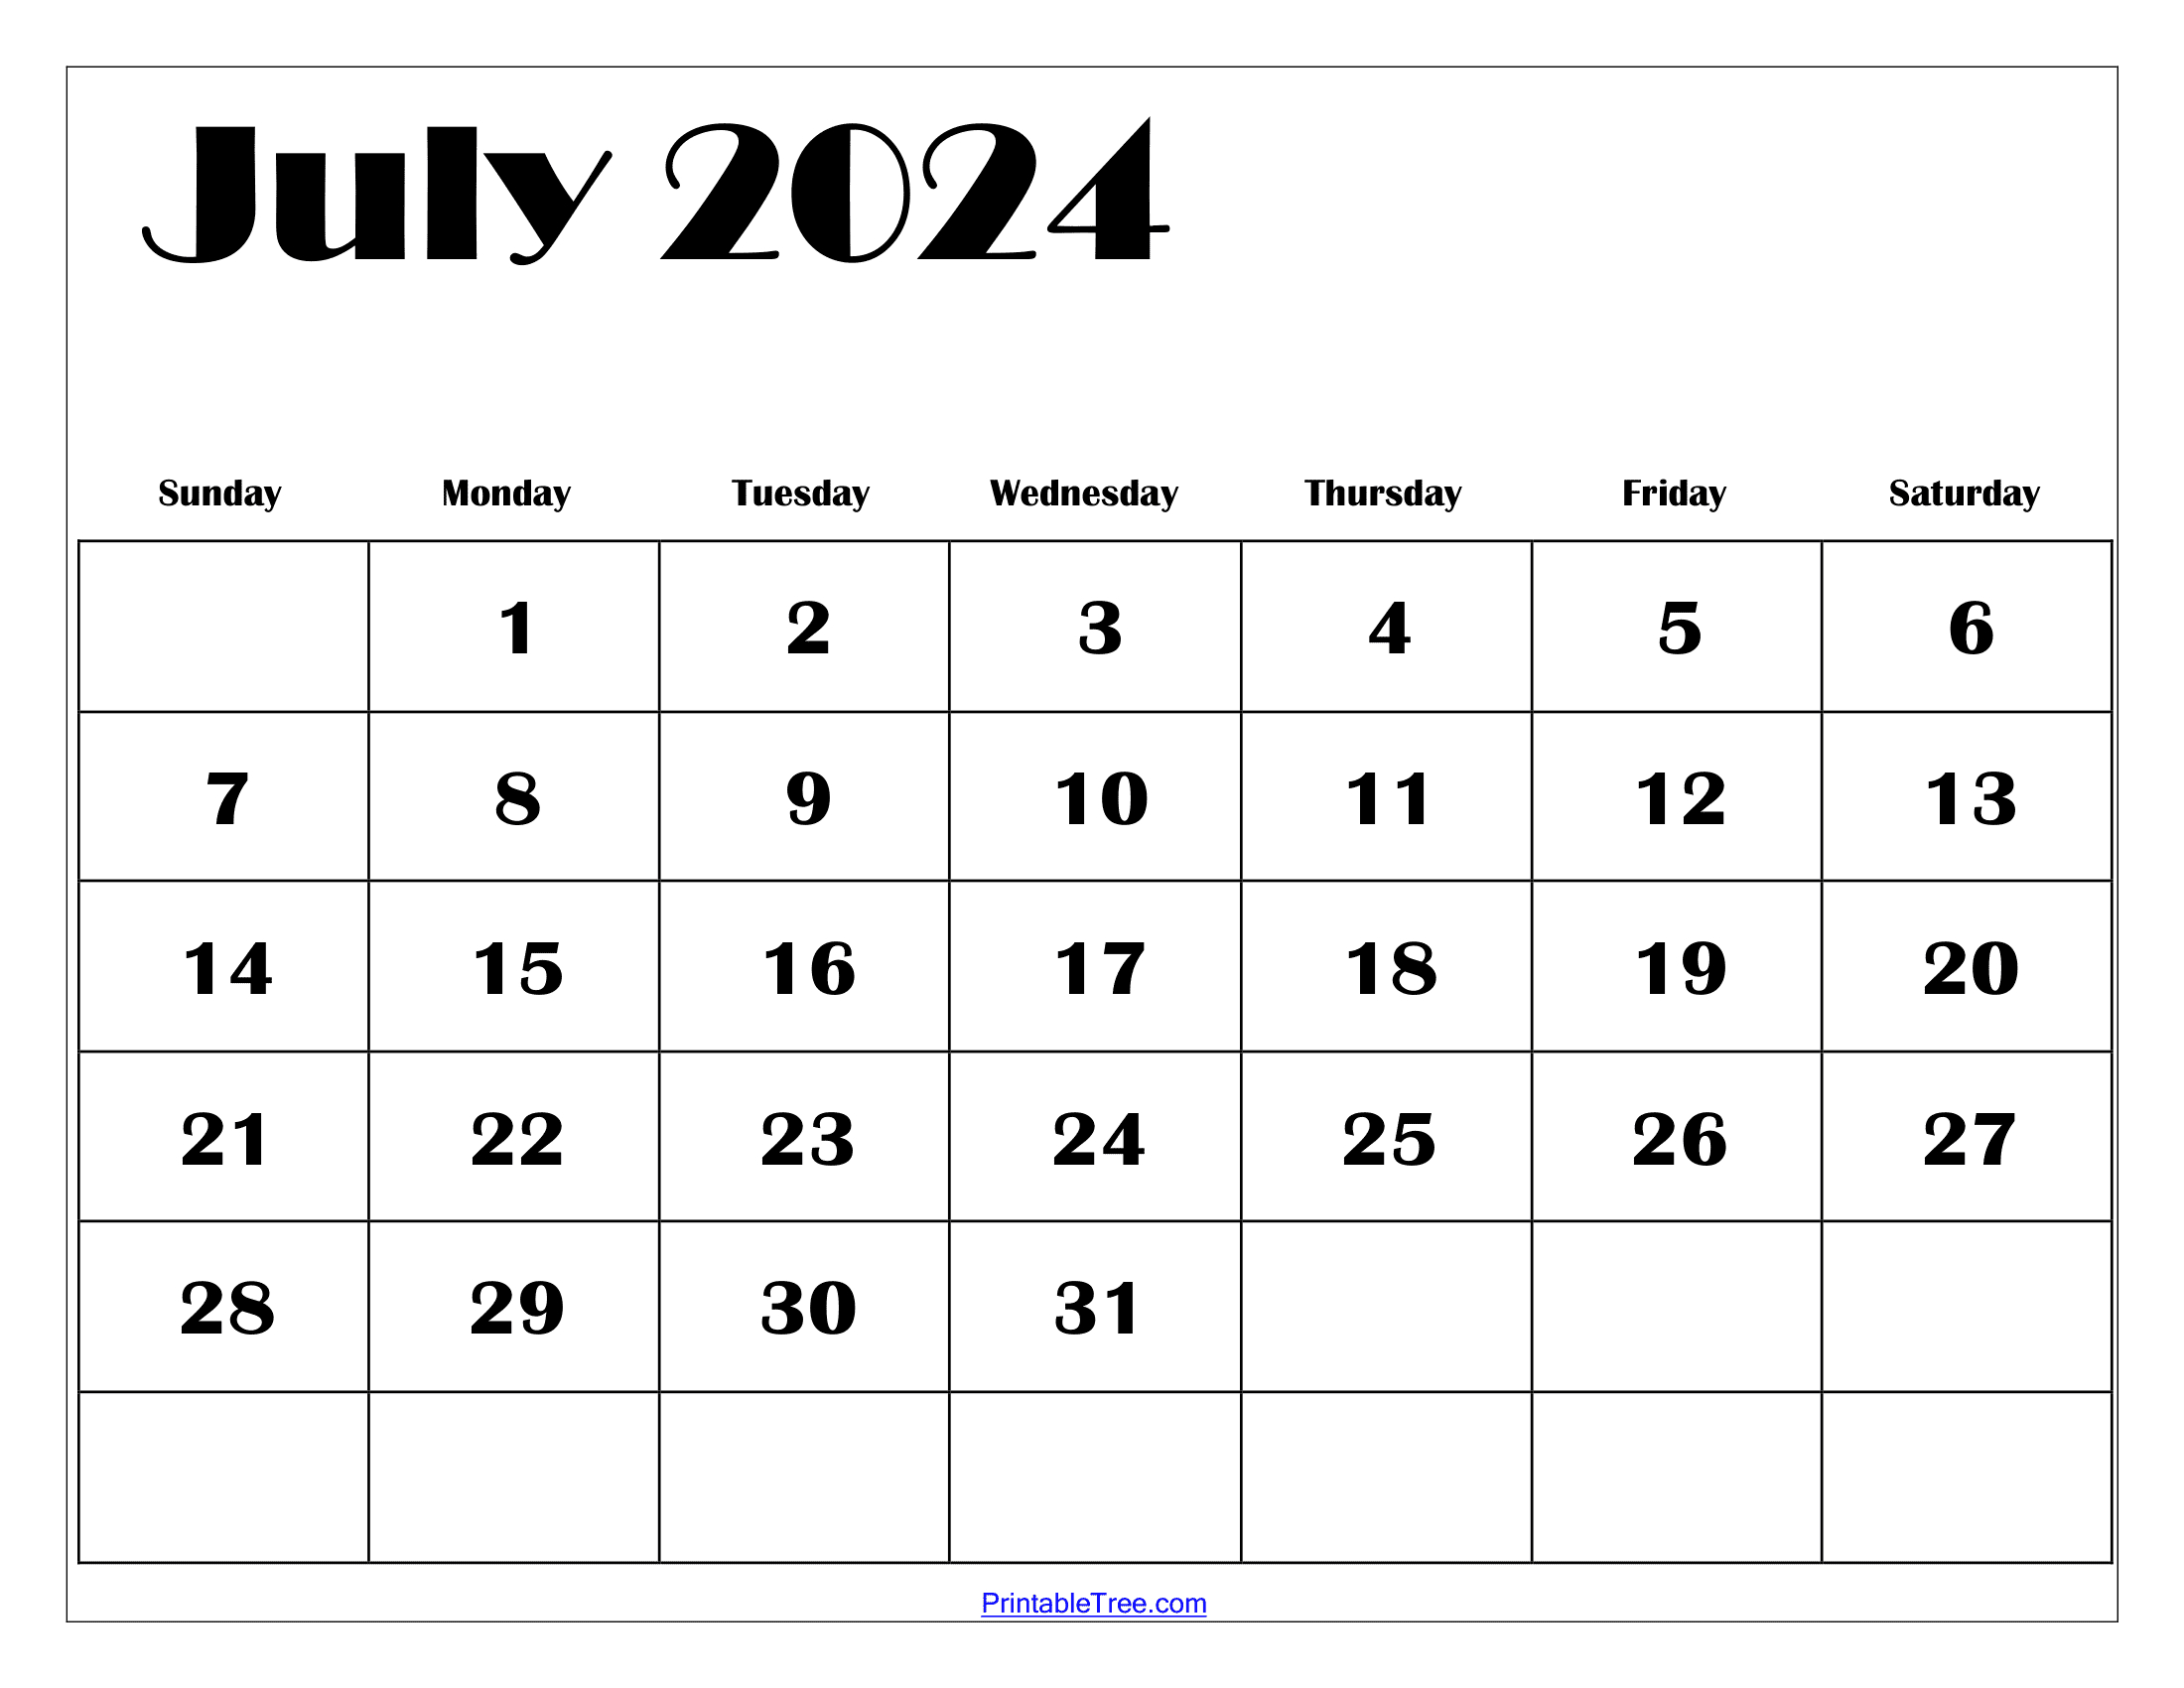 July 2024 Calendar Printable Pdf With Holidays Free Template | Printable Calendar 2024 July